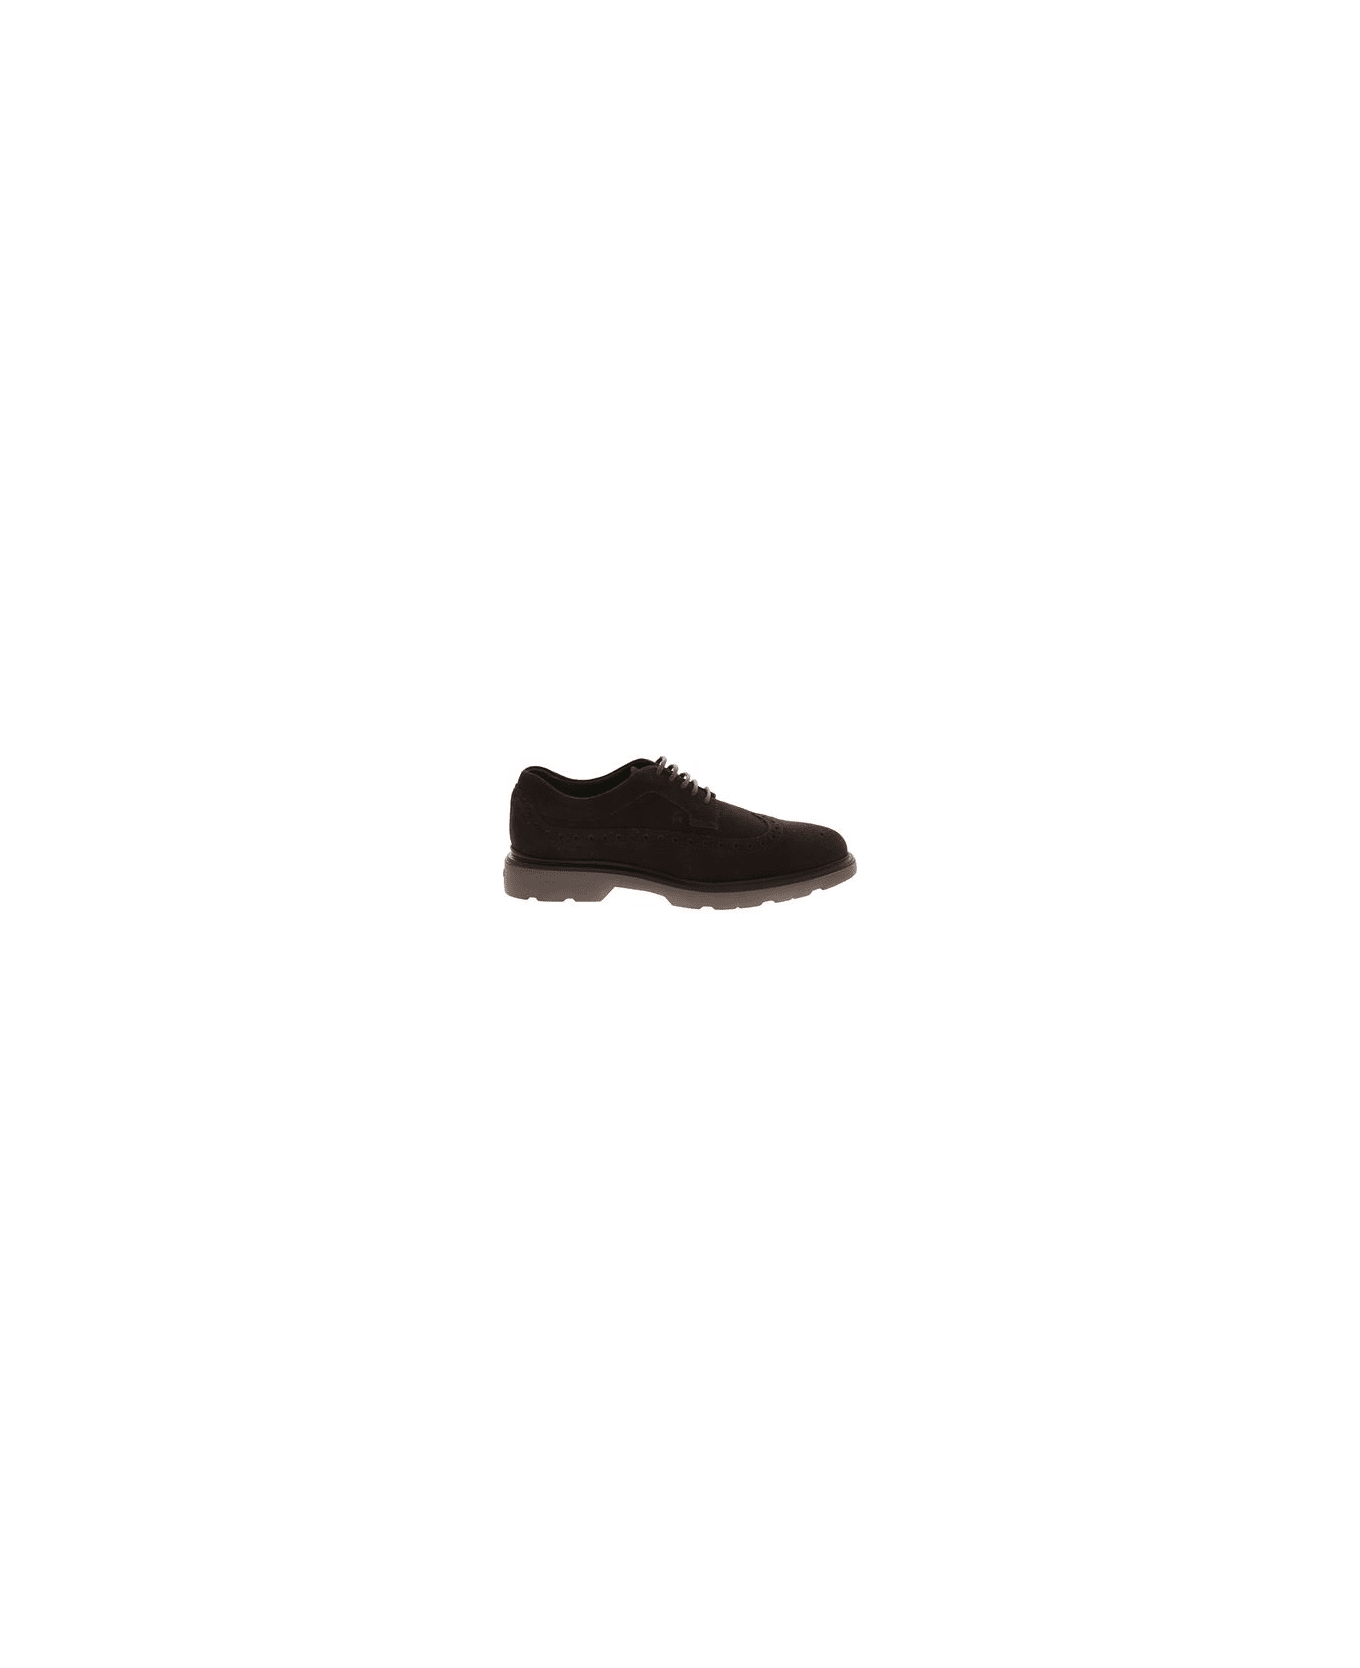 Hogan Laced Shoes - Marrone